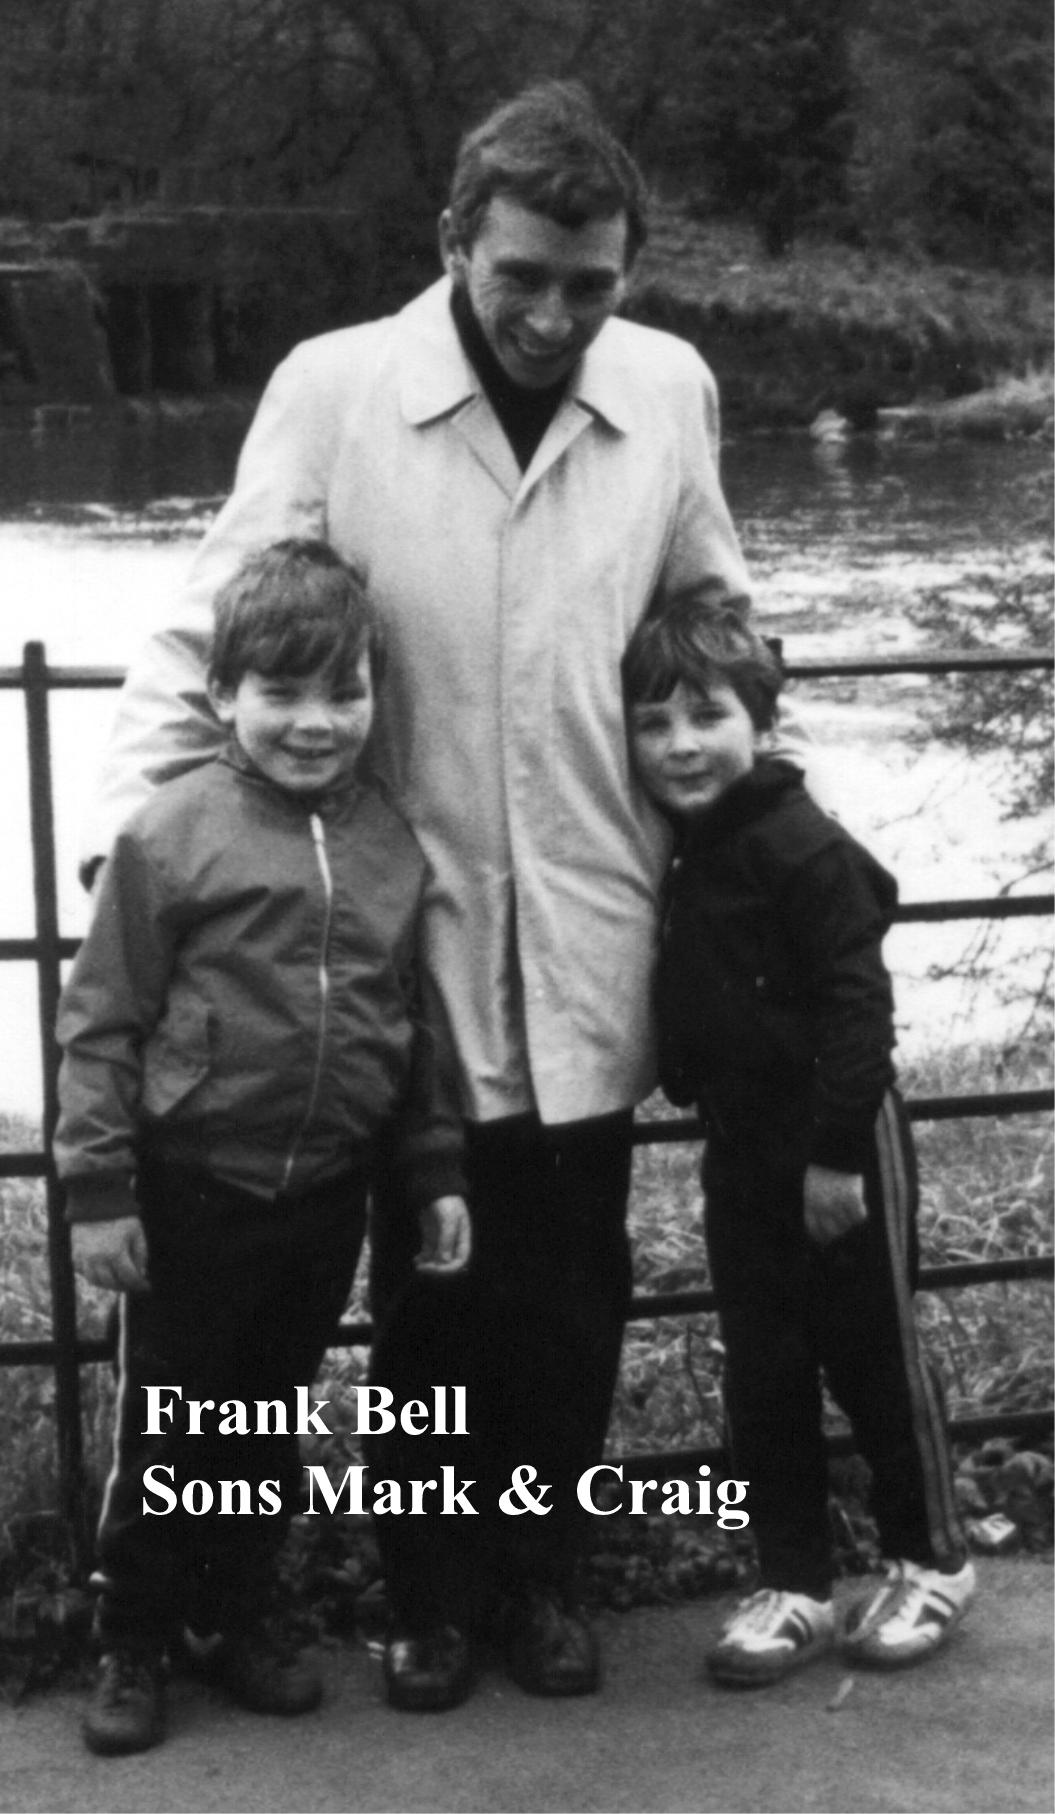 Frank Bell & sons